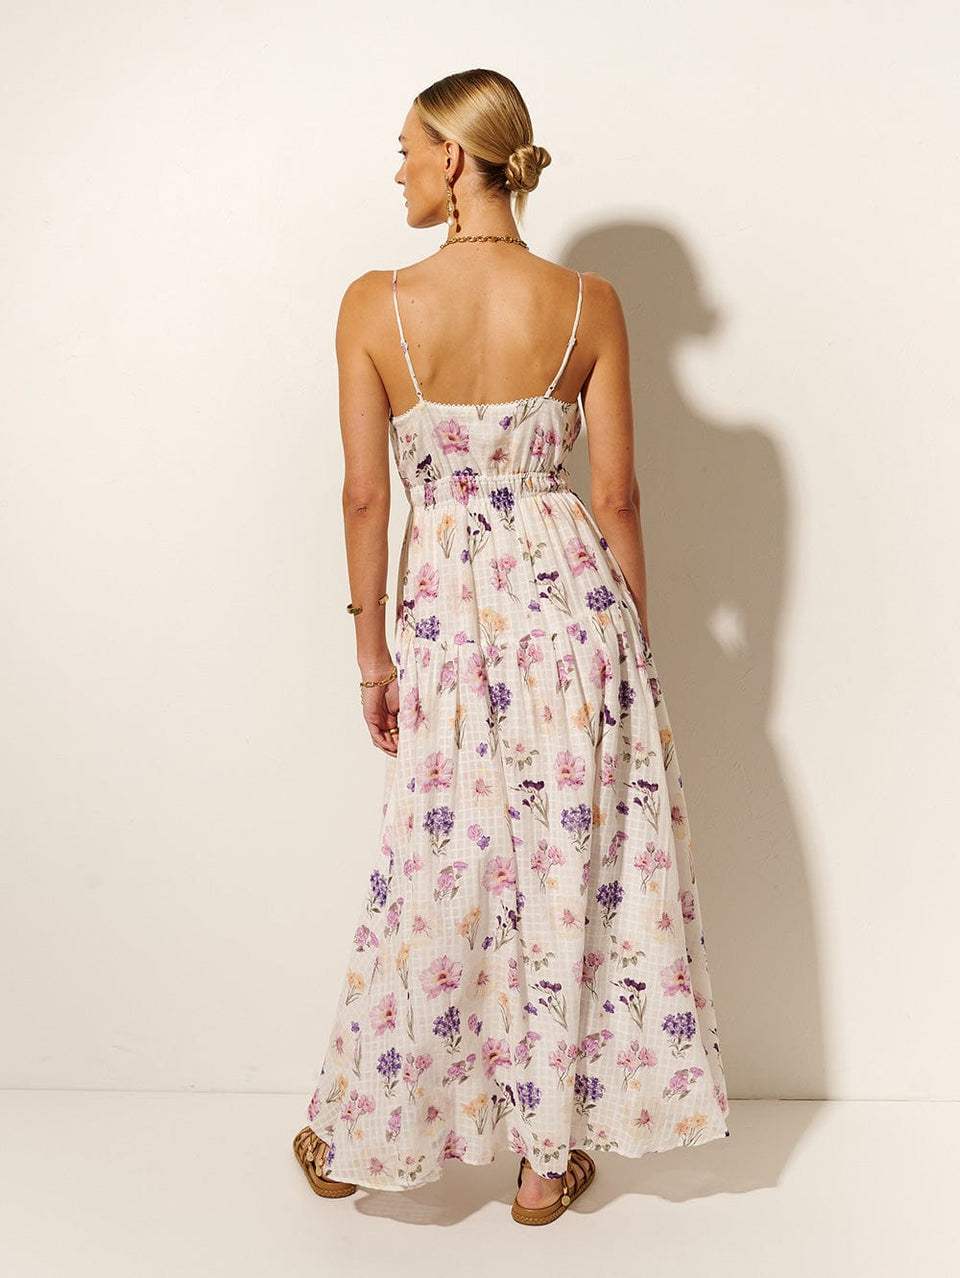 Phoebe Maxi Dress KIVARI | Model wears ivory and purple floral maxi dress back view